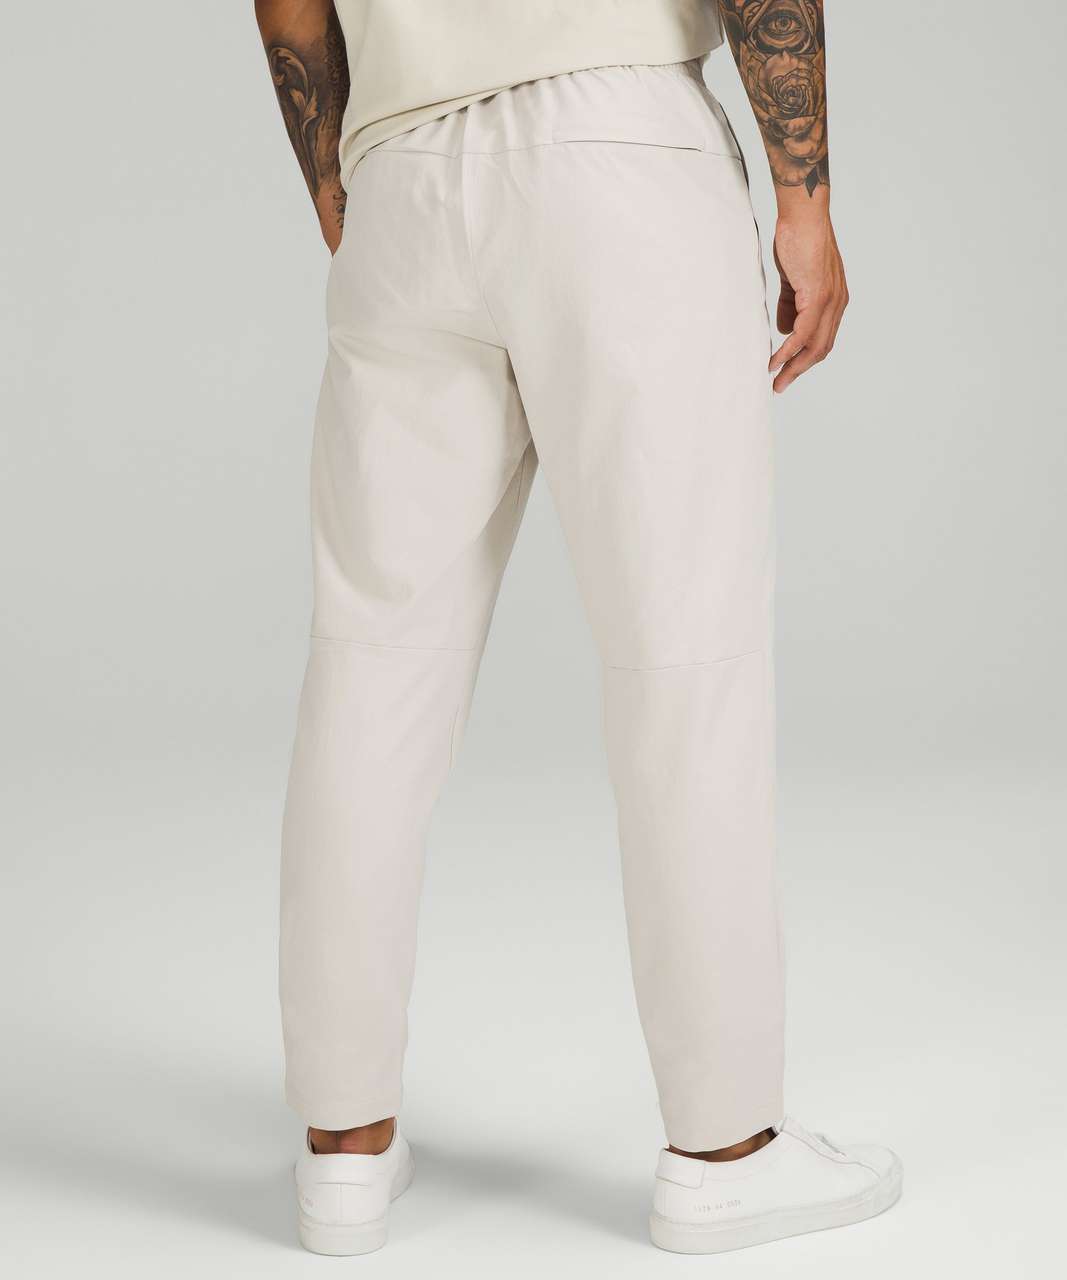 Lululemon New Venture Trouser *Pique Fabric - Natural Ivory